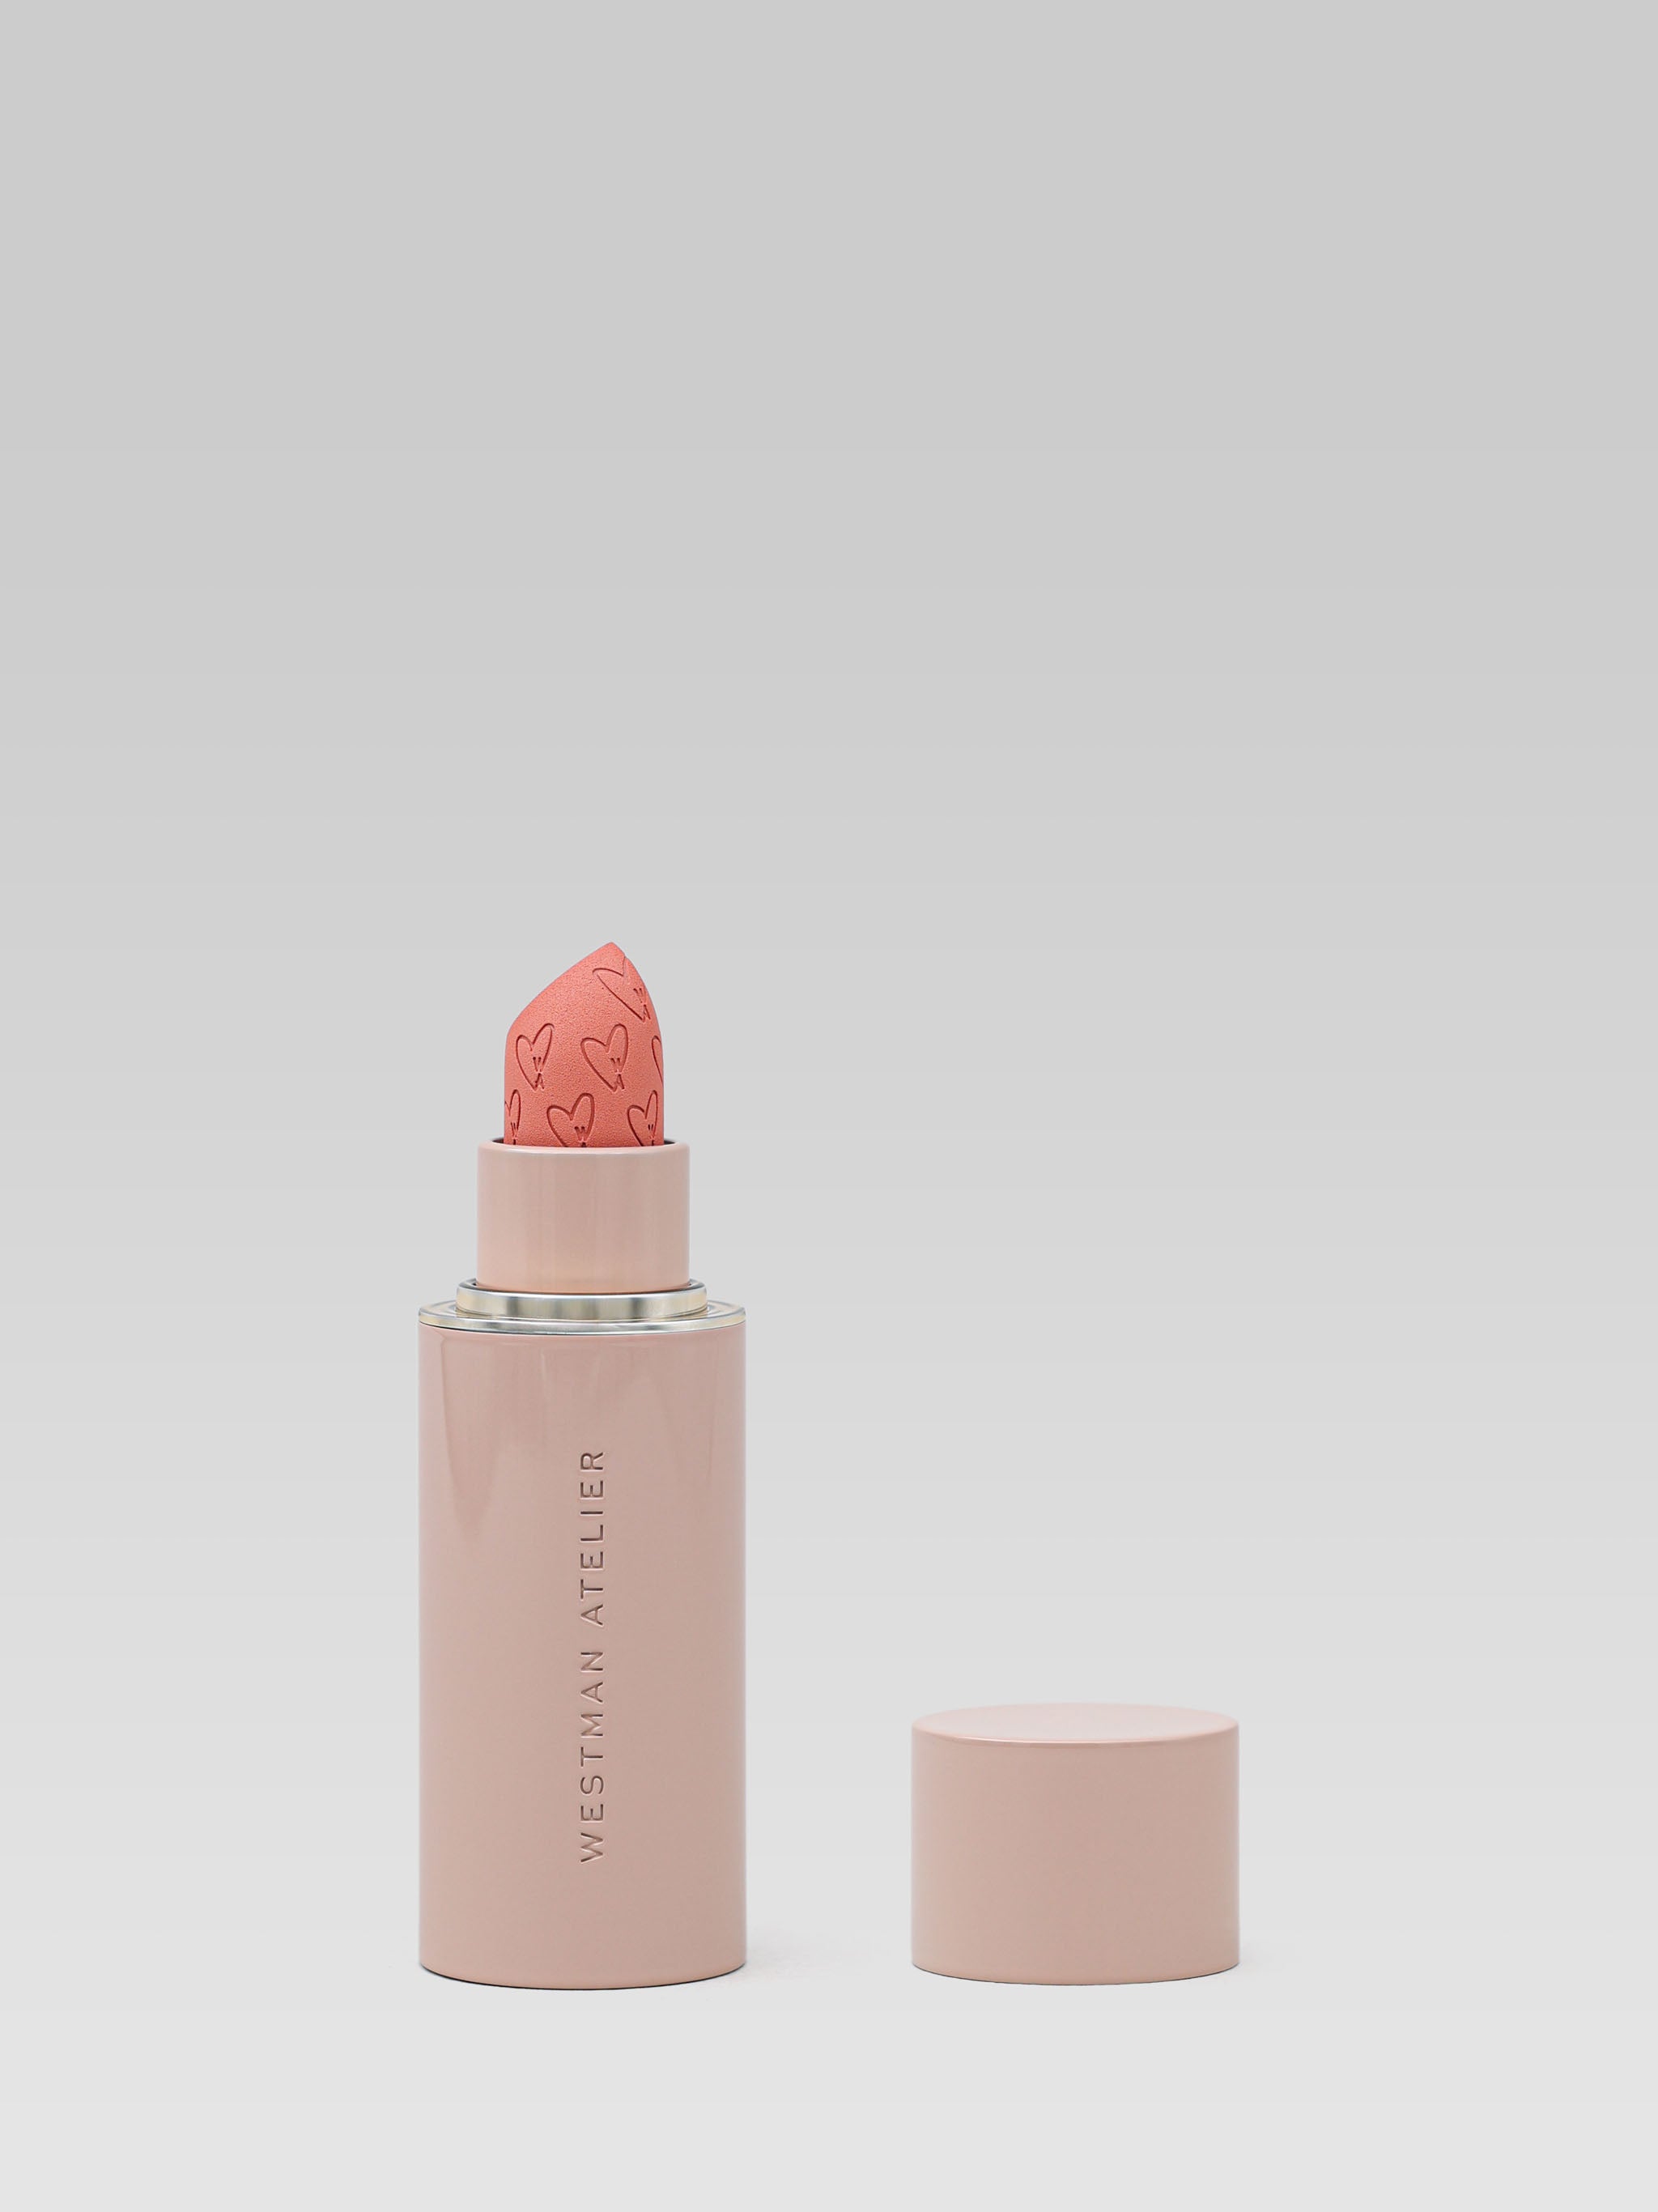 Westman Atelier Lip Suede Matte Lipstick in Läcker product shot